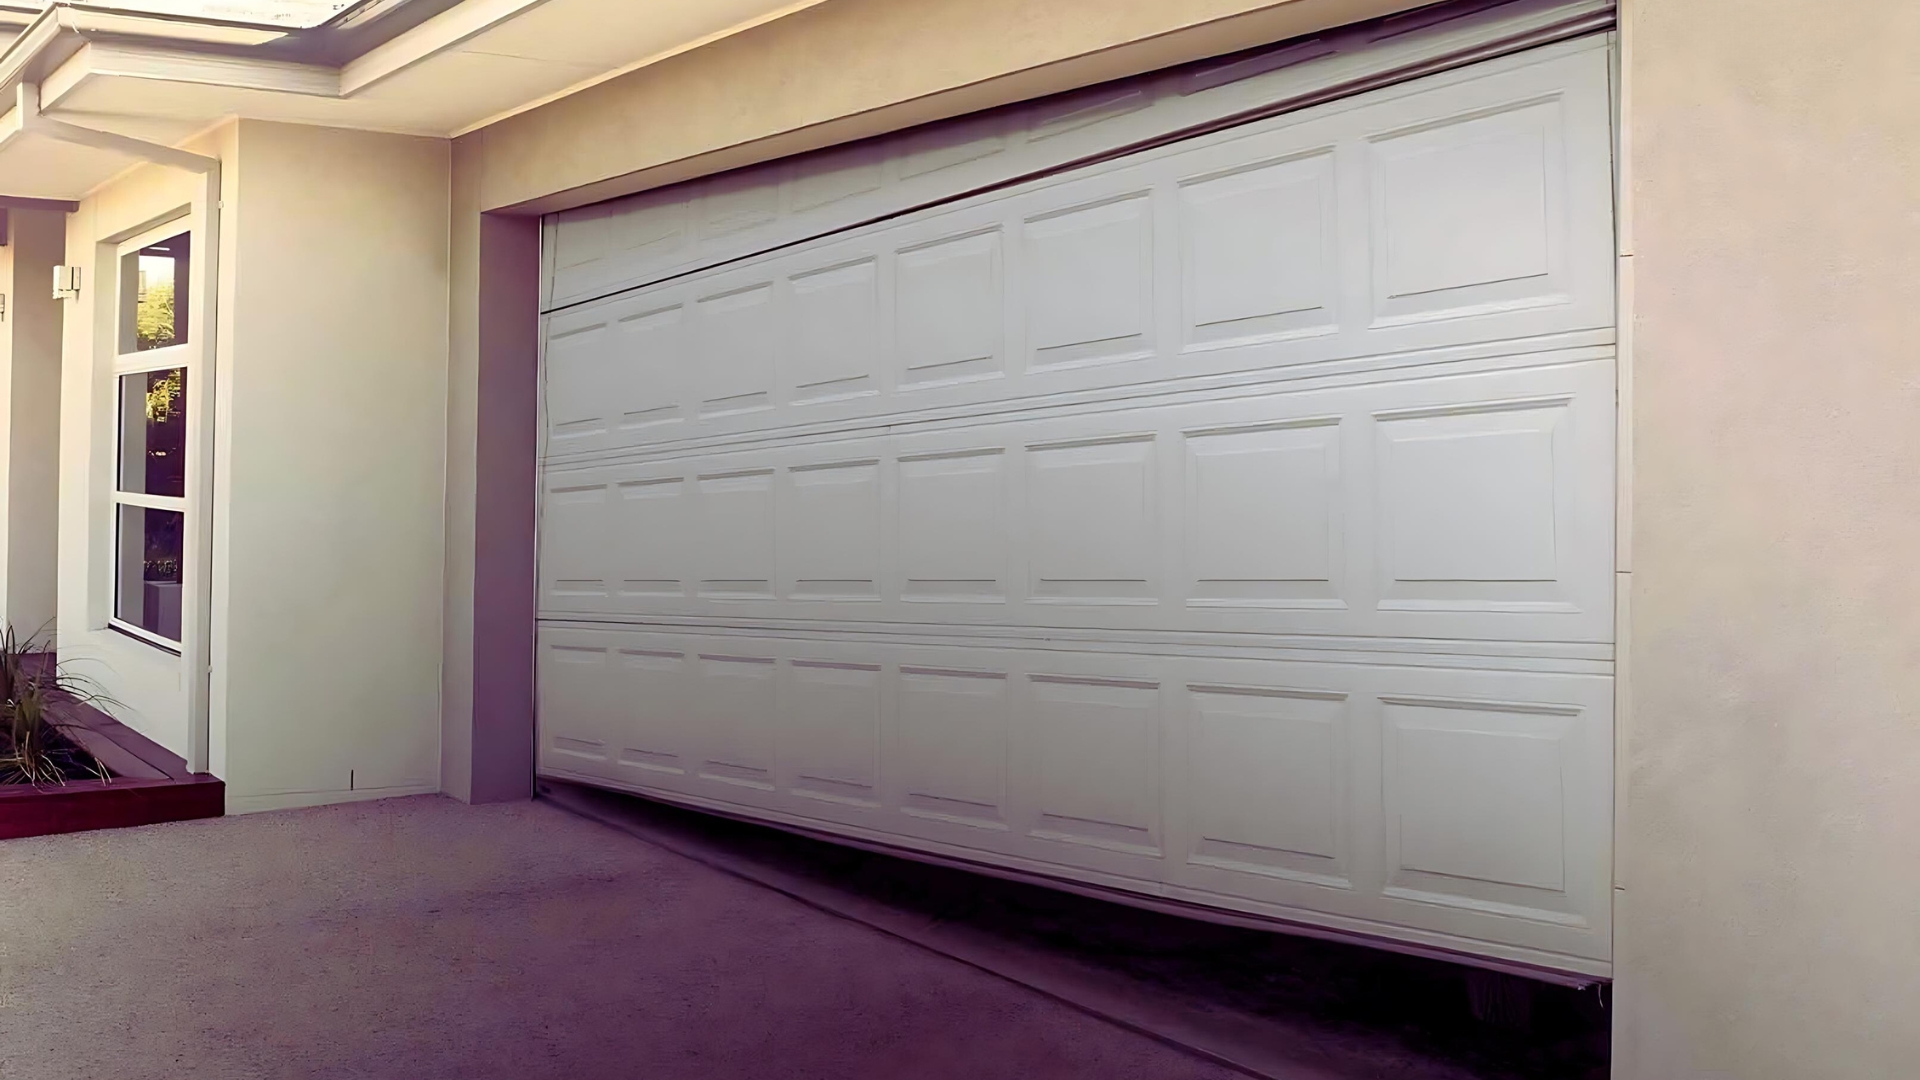 A residential garage door that is off-balanced